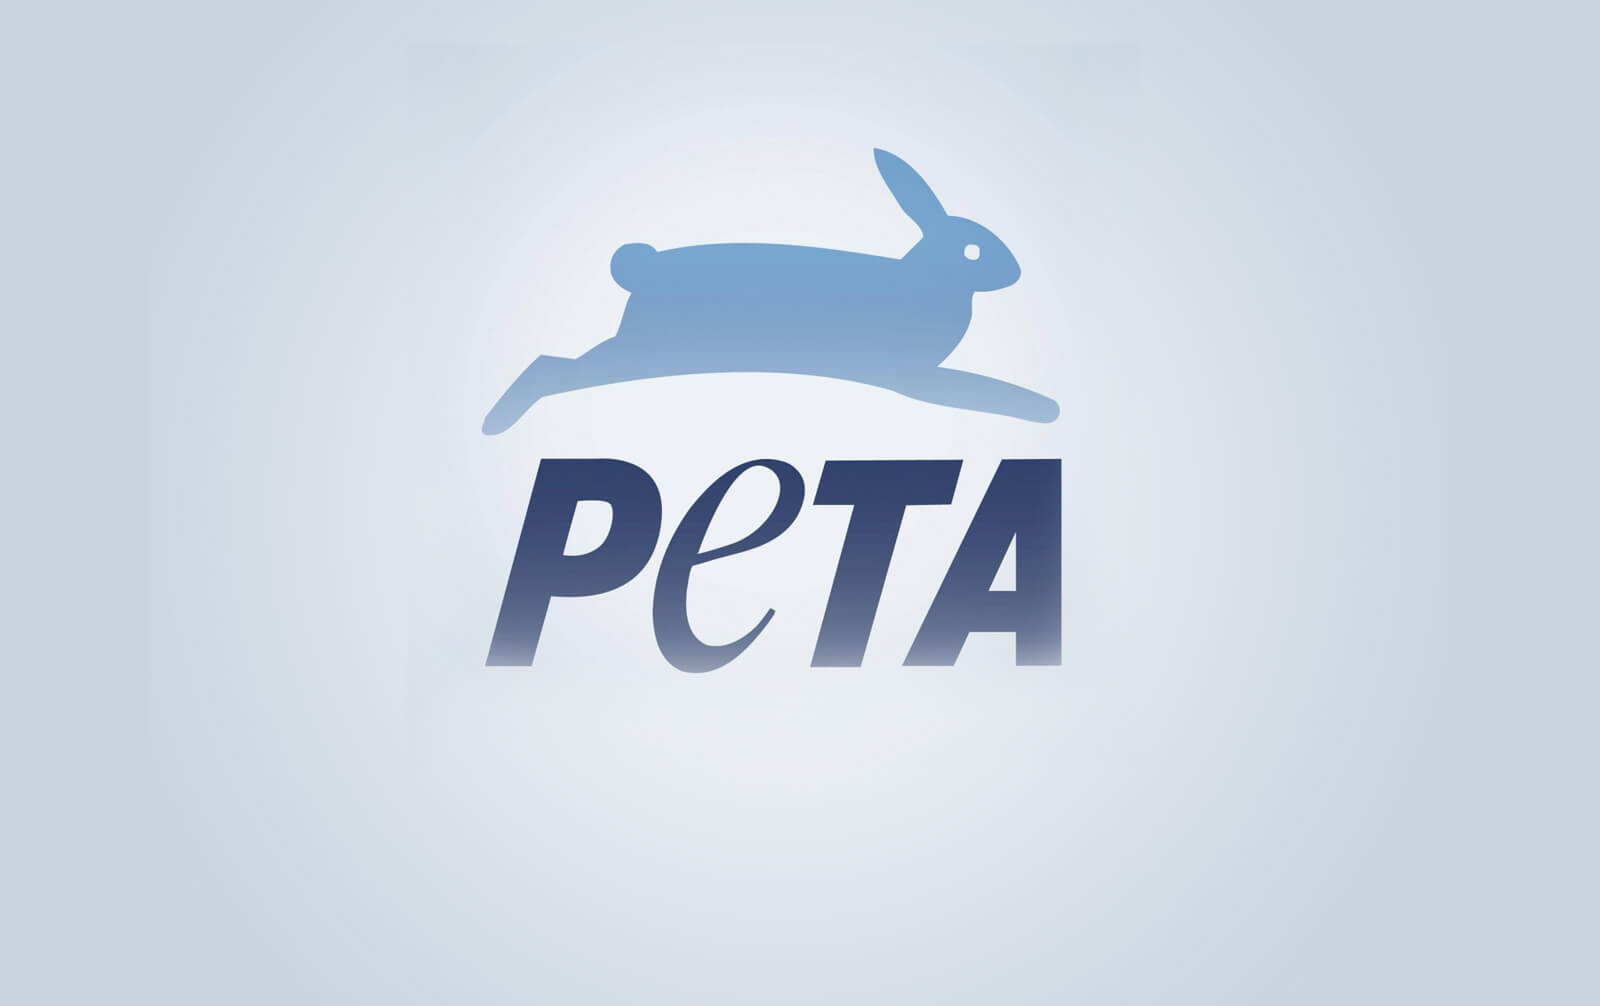 peta facebook placeholder new The University of Houston Racks Up Multiple Violations; PETA Files Complaint